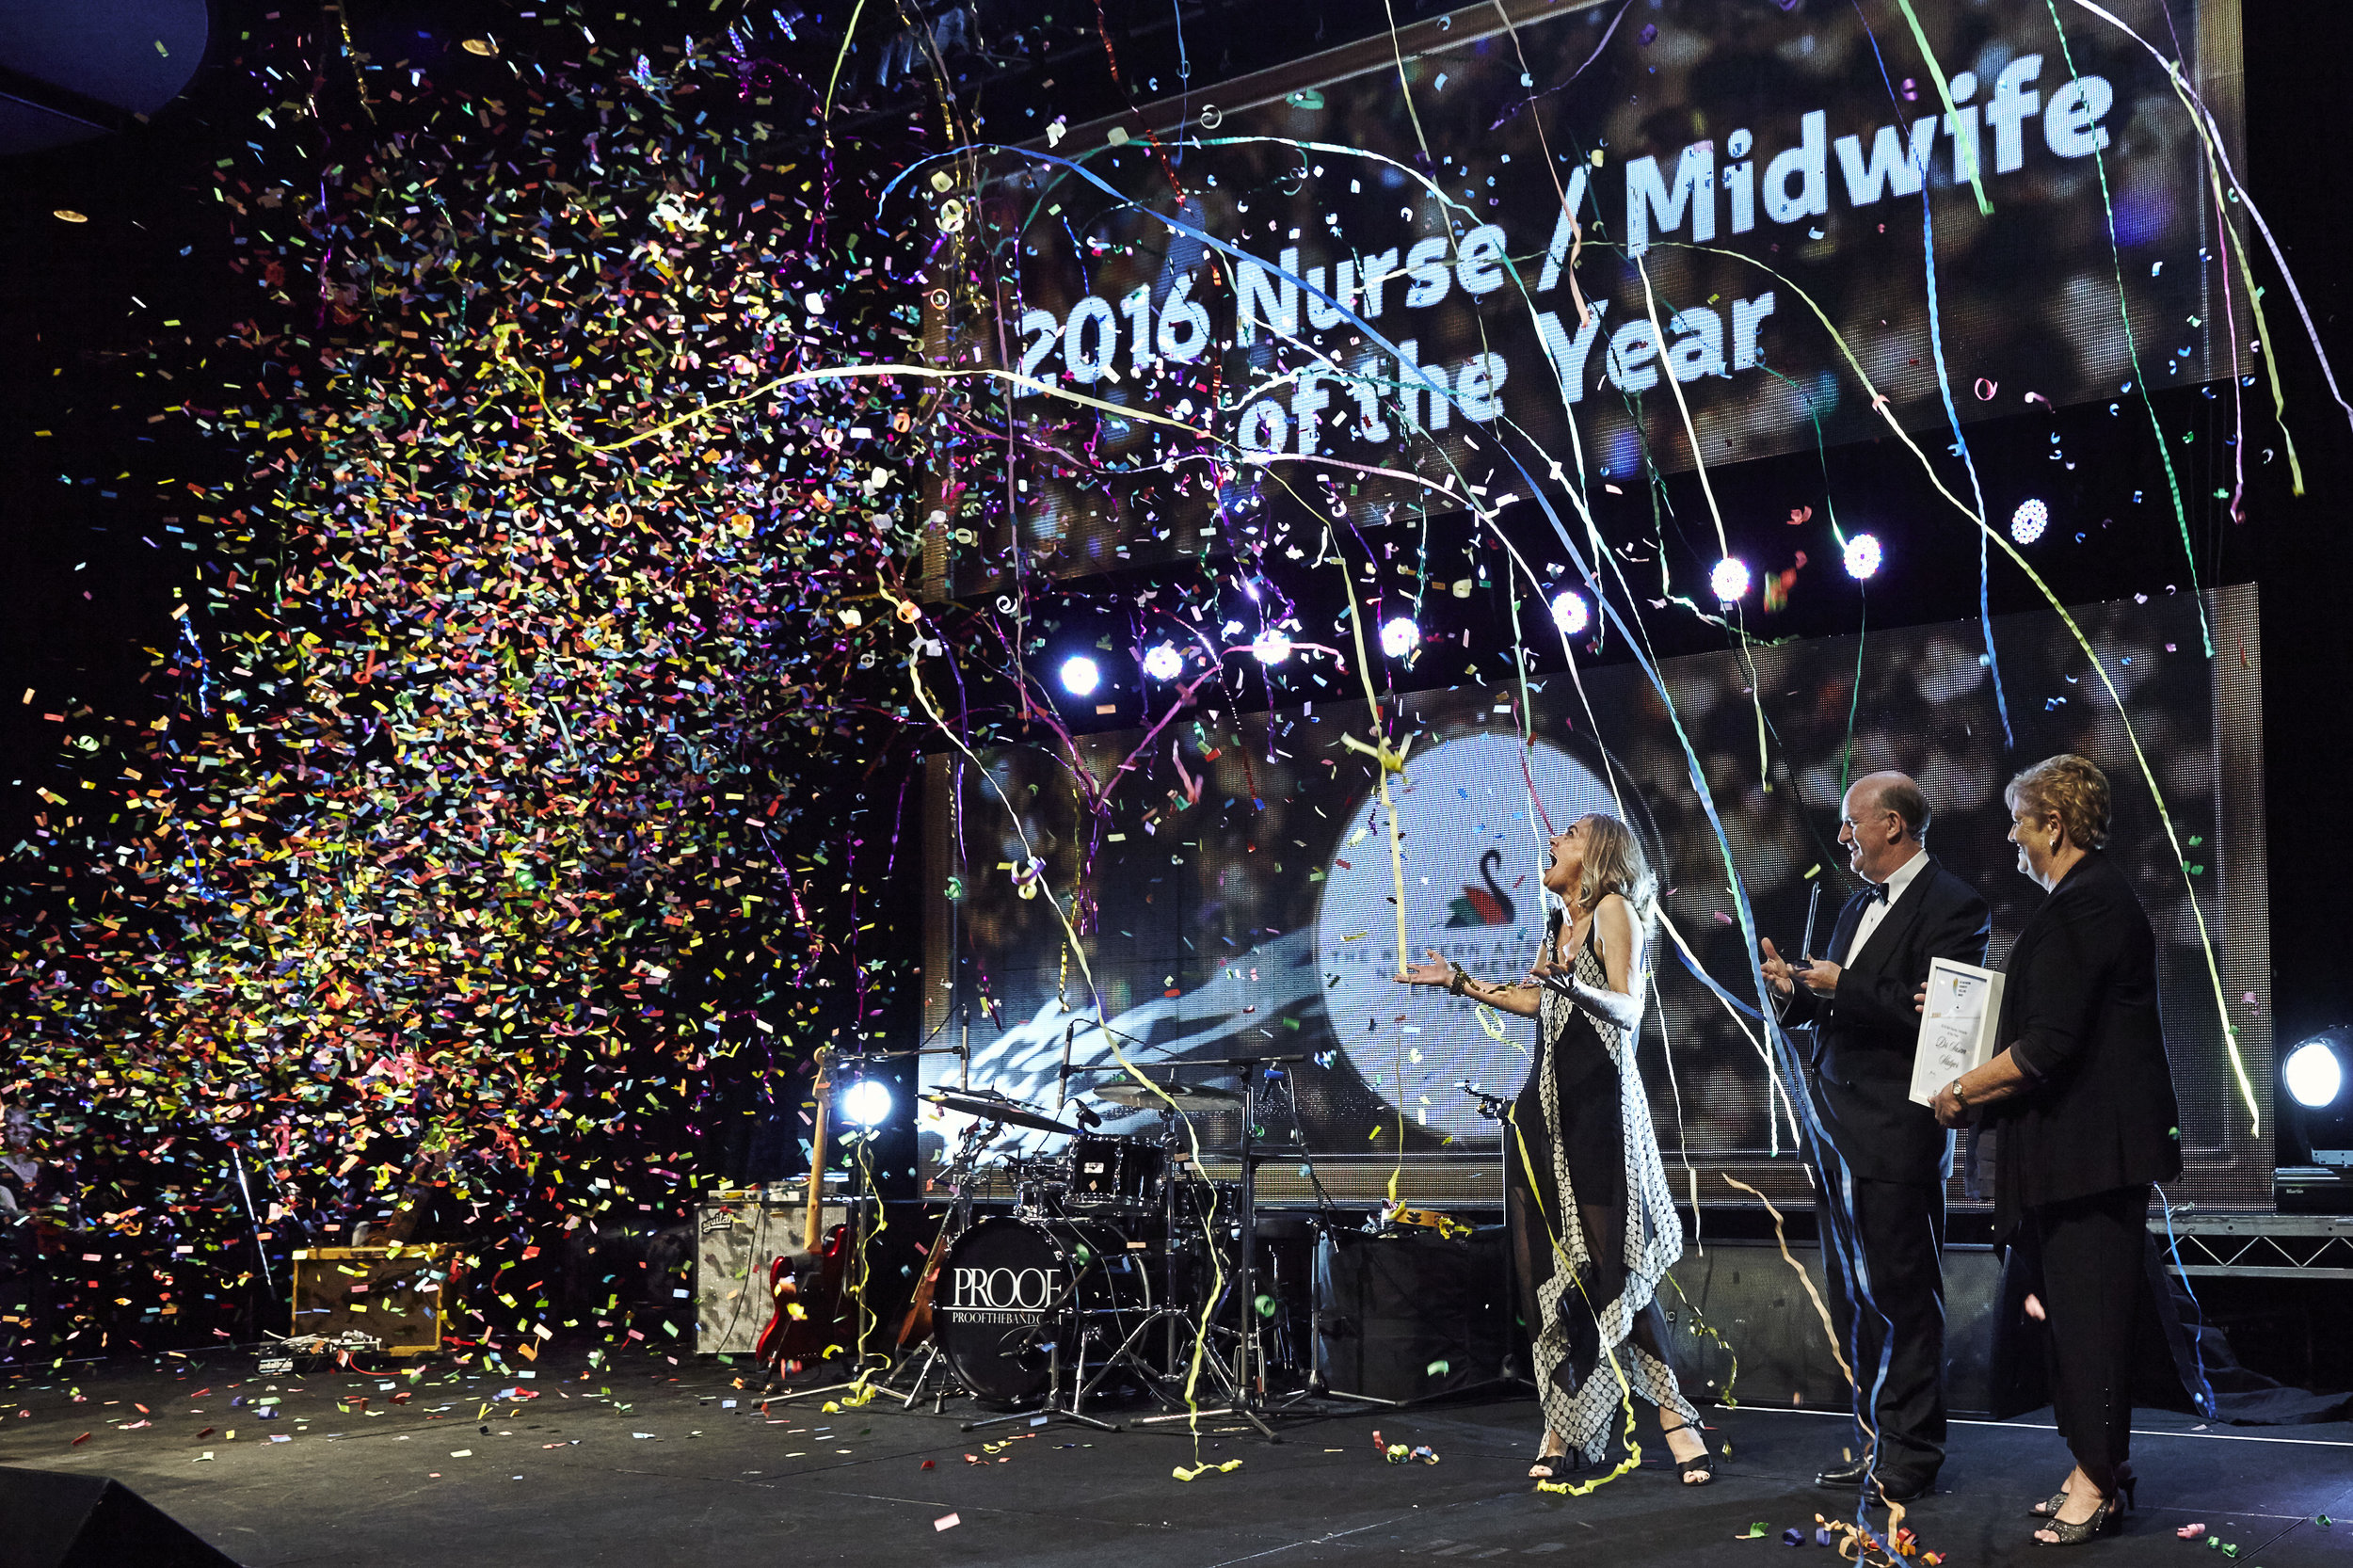 Susan Slatyer, 2016 Nurse/Midwife of the Year